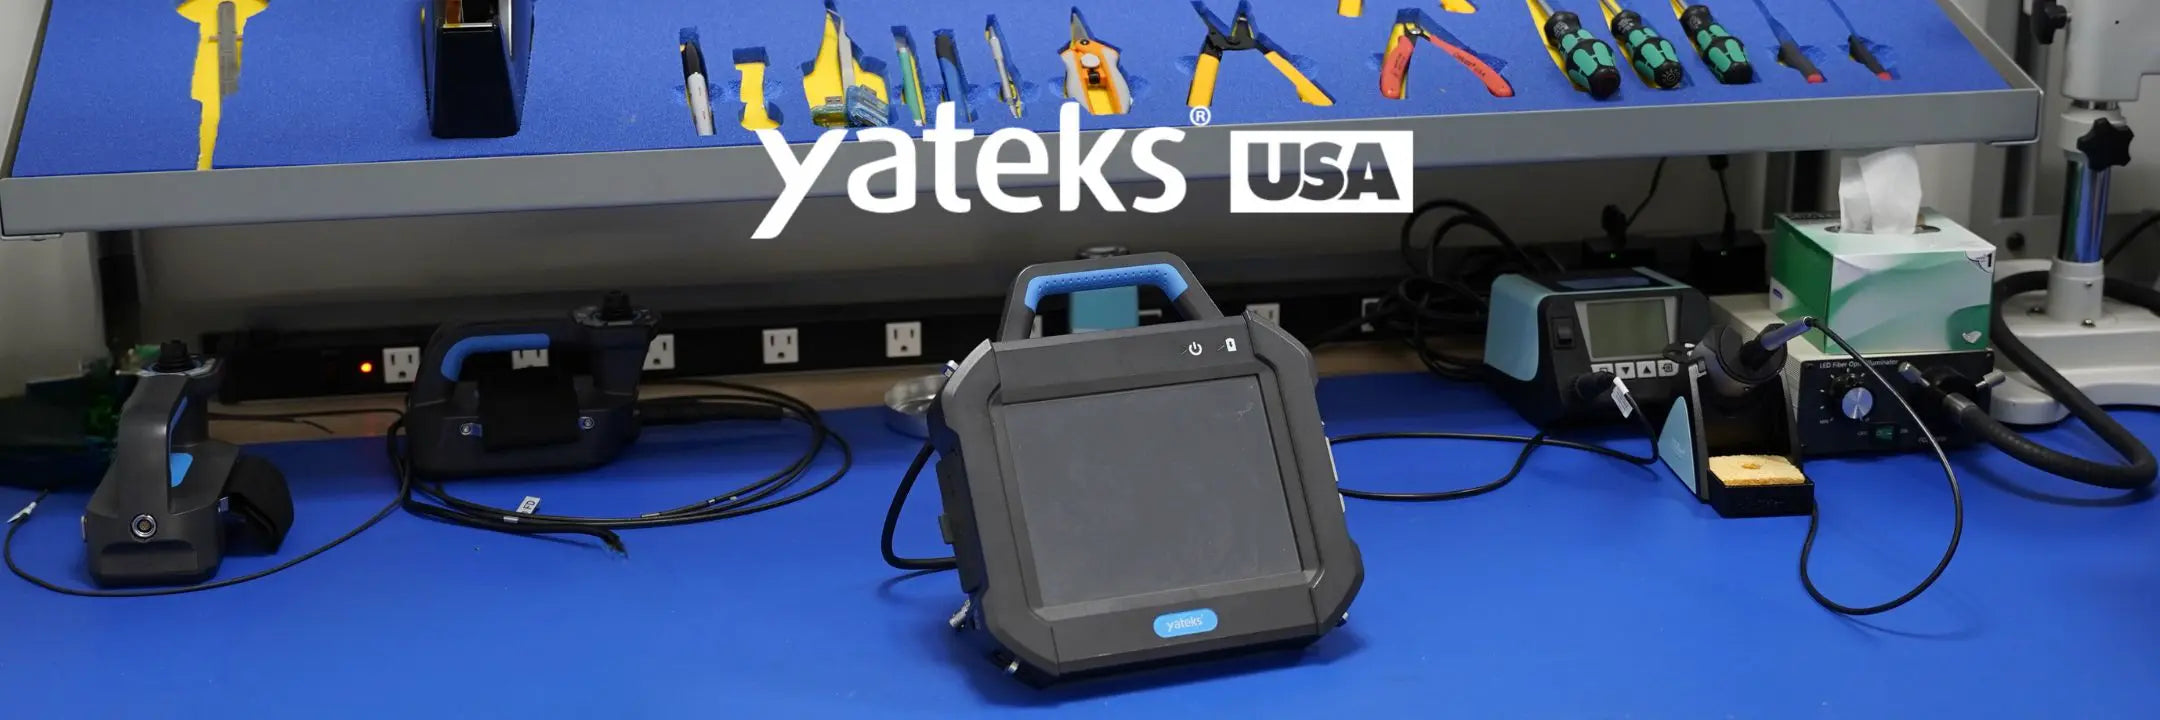 Yateks USA Repair Center-InterTest